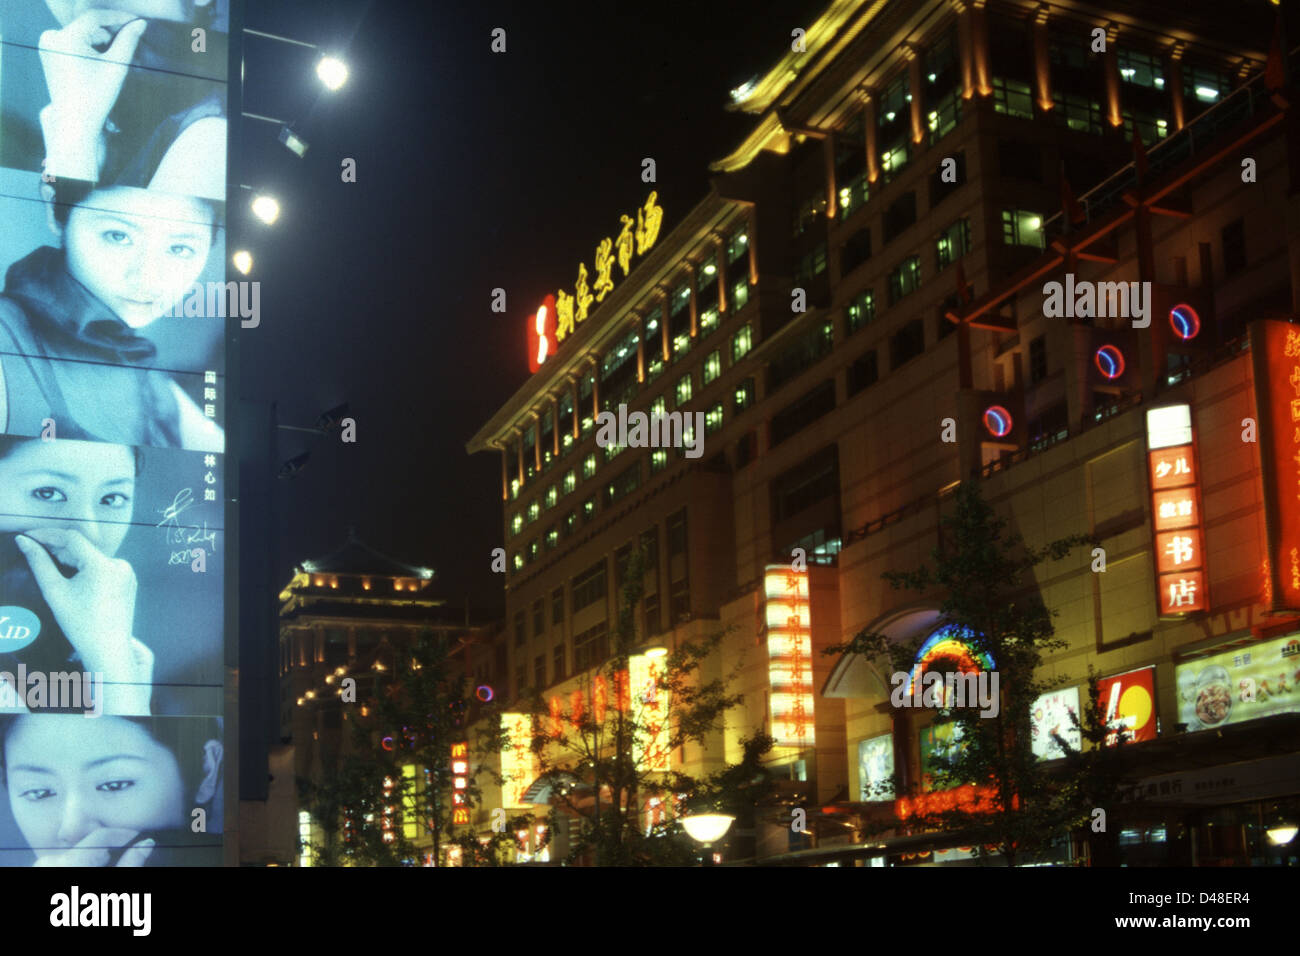 Illuminated advertisement poster at Wanfujing street in Beijing China Stock Photo